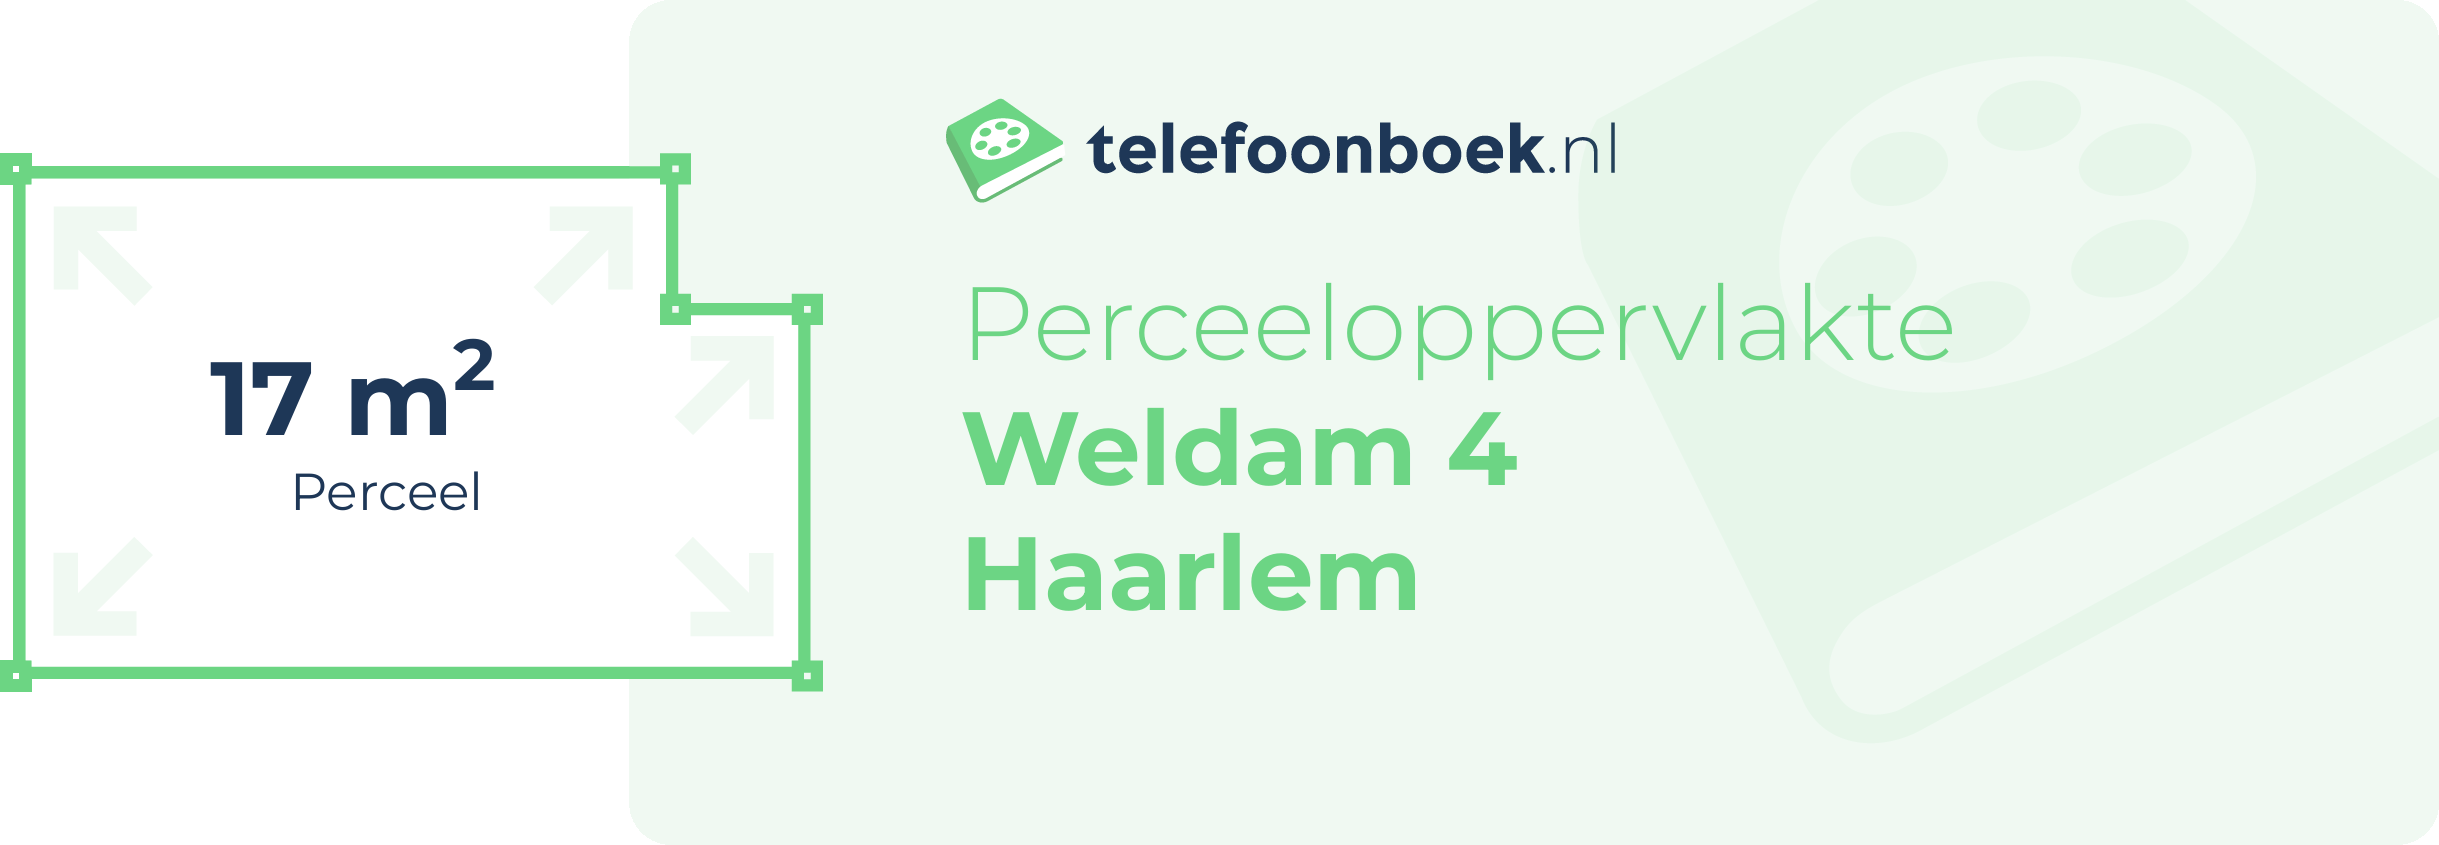 Perceeloppervlakte Weldam 4 Haarlem